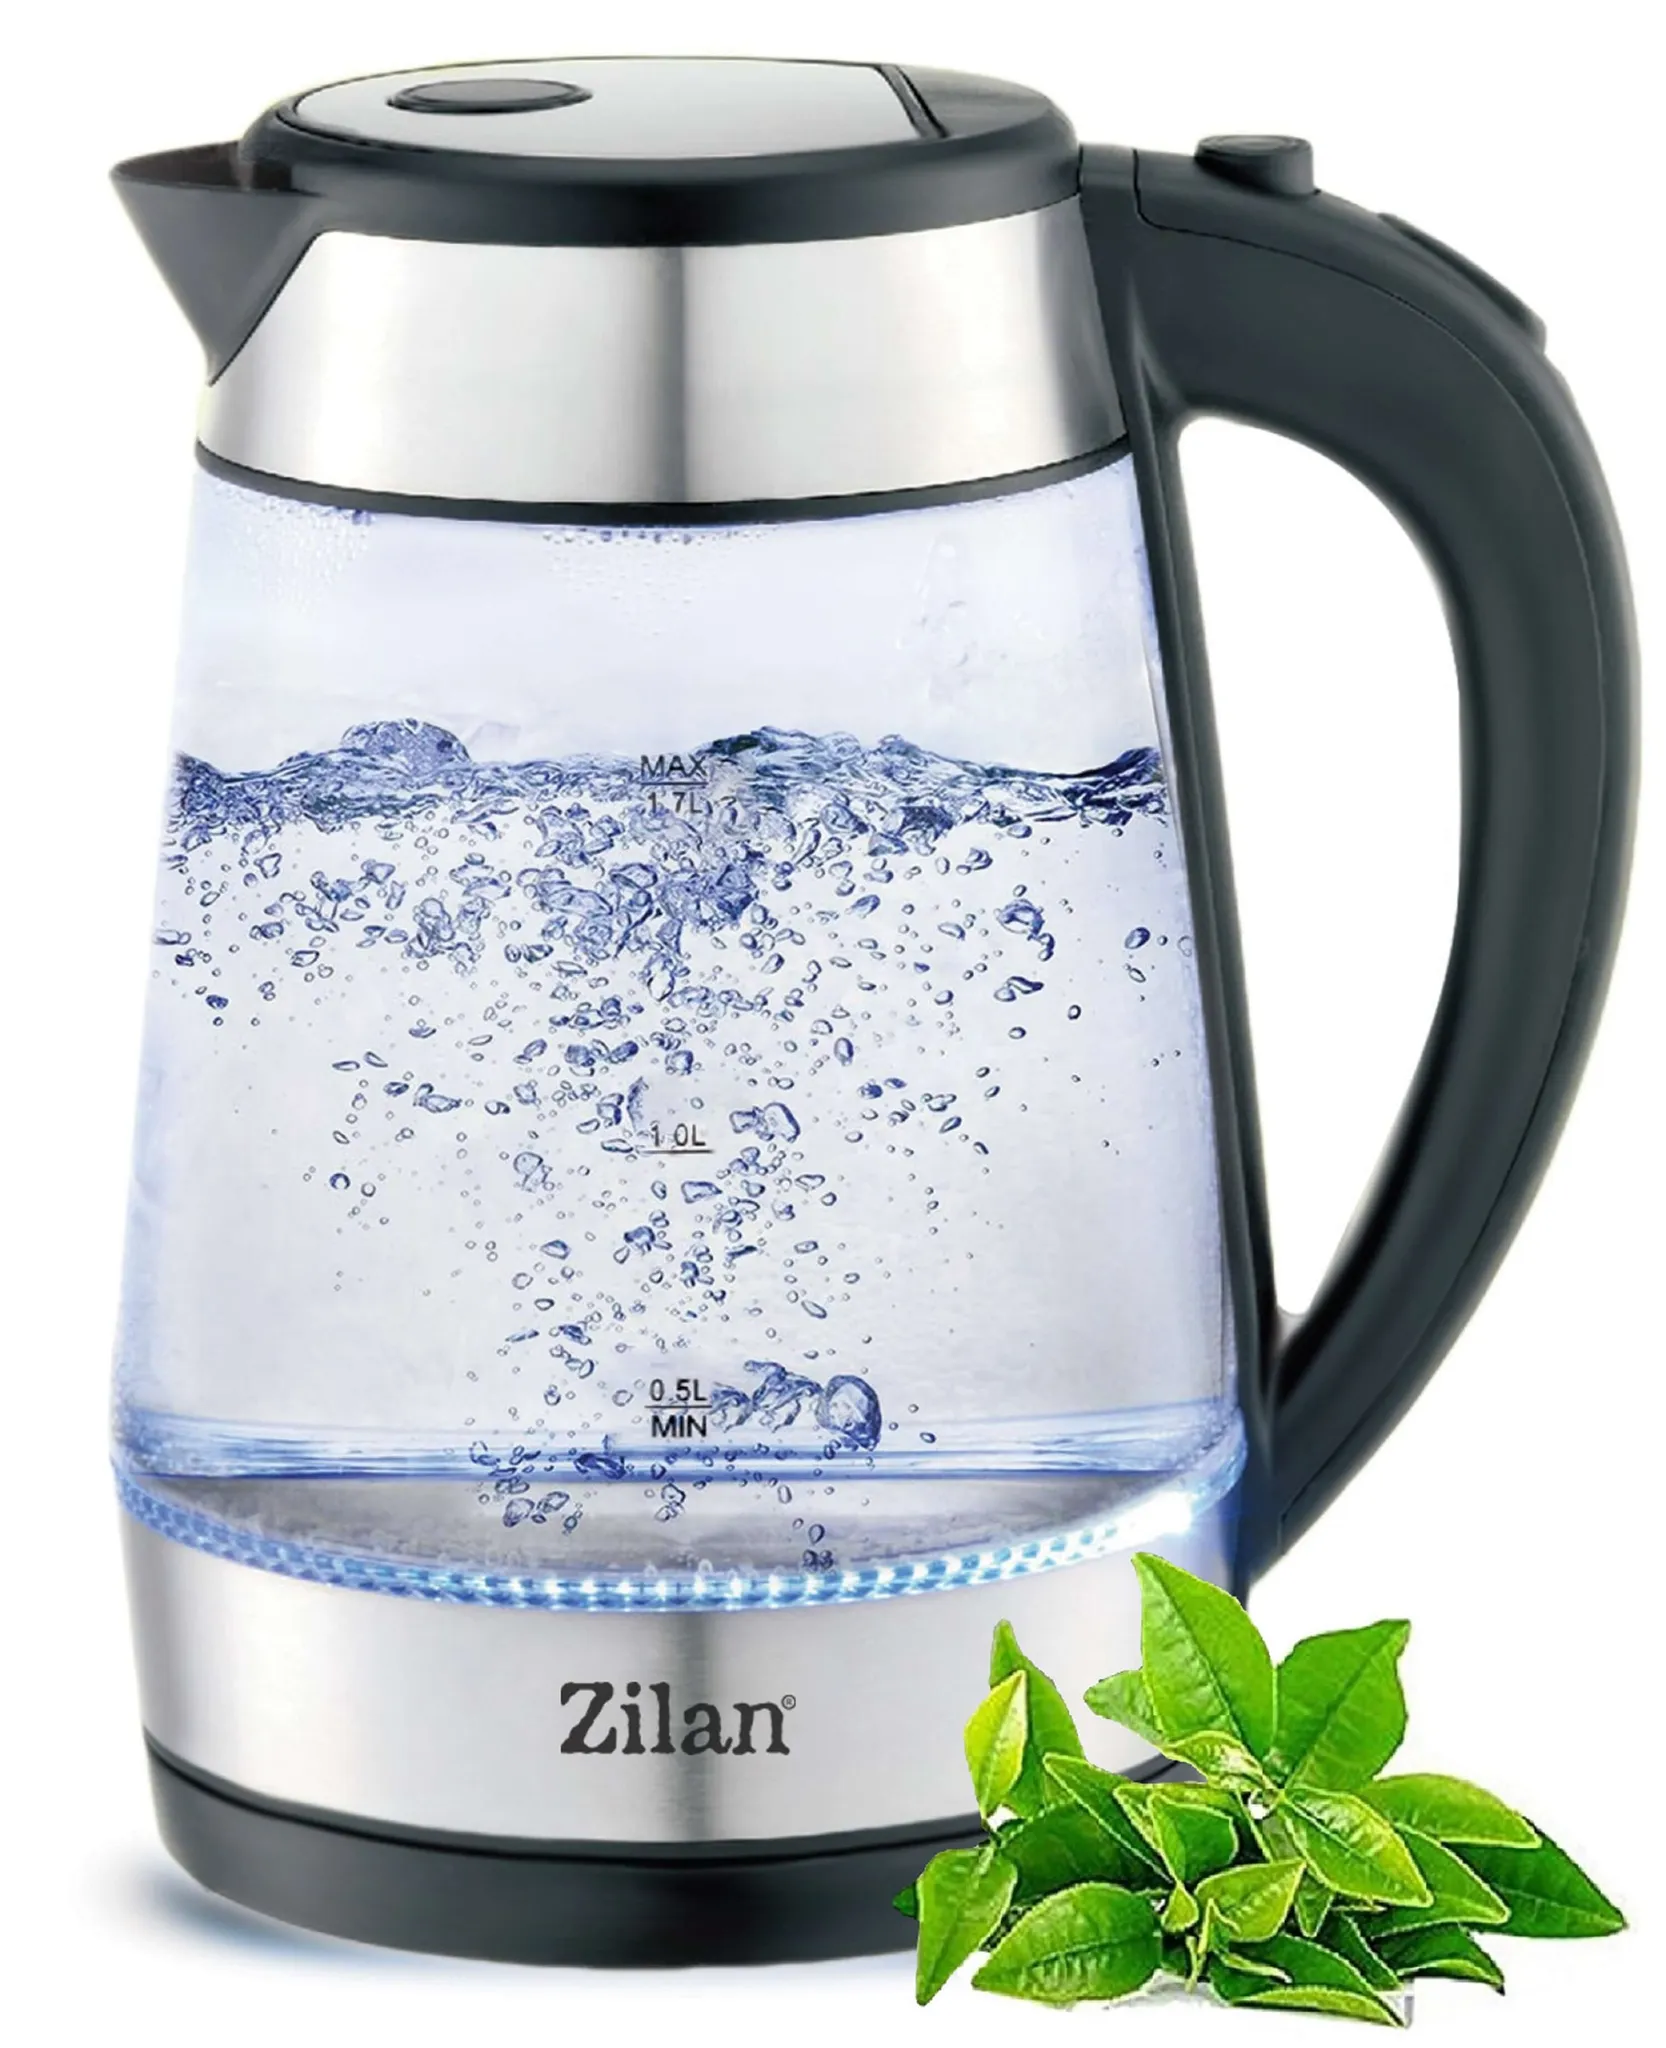 Zilan Retro Wasserkocher 1,7 Liter Water Kettle Heißwasserspender